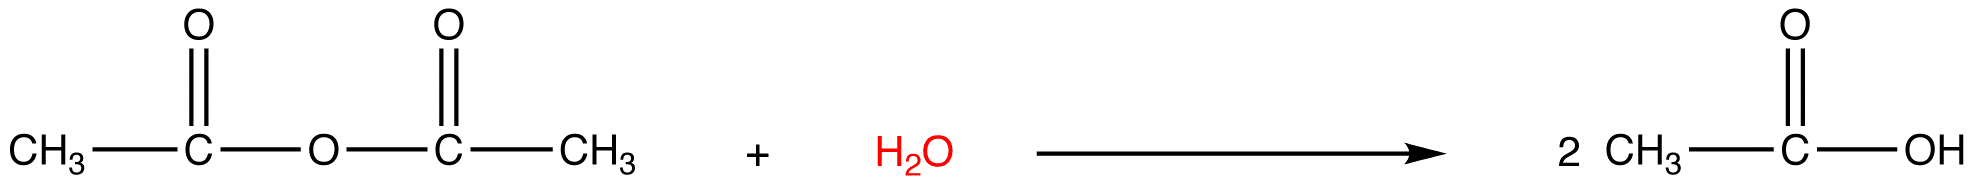 hydrolysis2.png